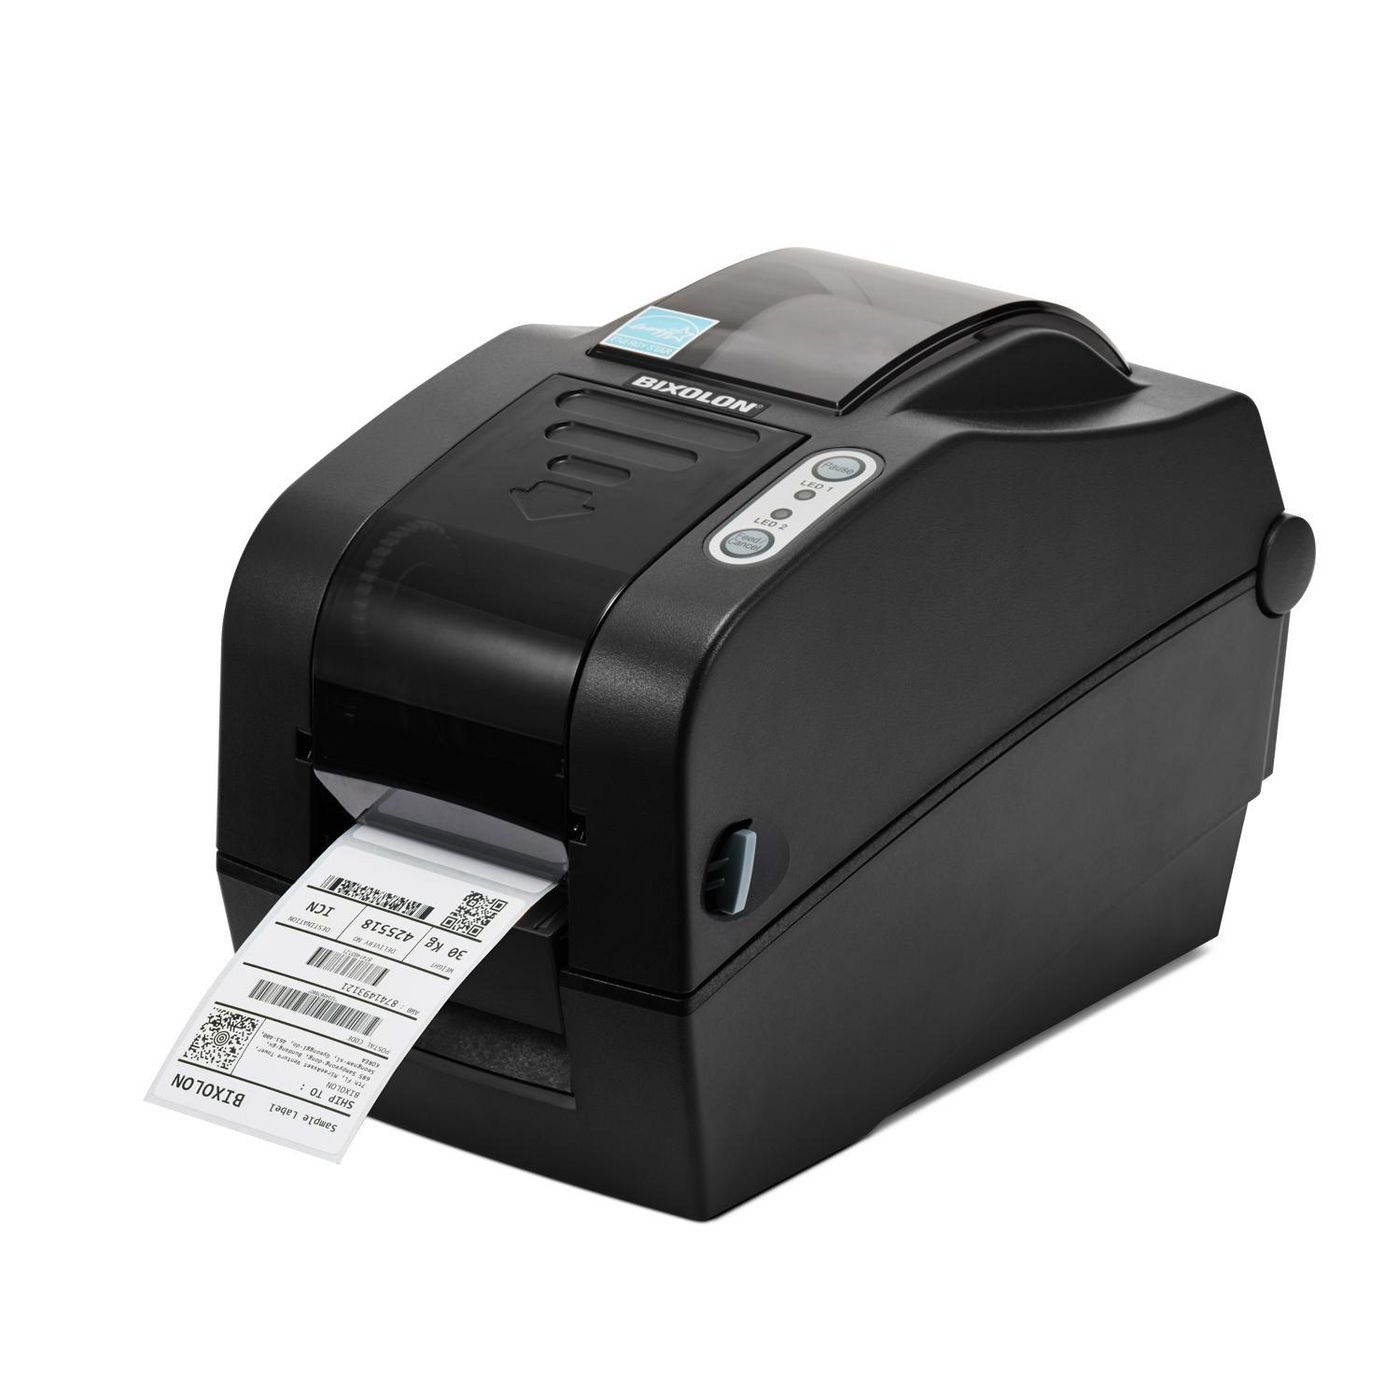 Slp-tx223cg - Label Printer - Direct Thermal - USB / Serial / Parallel